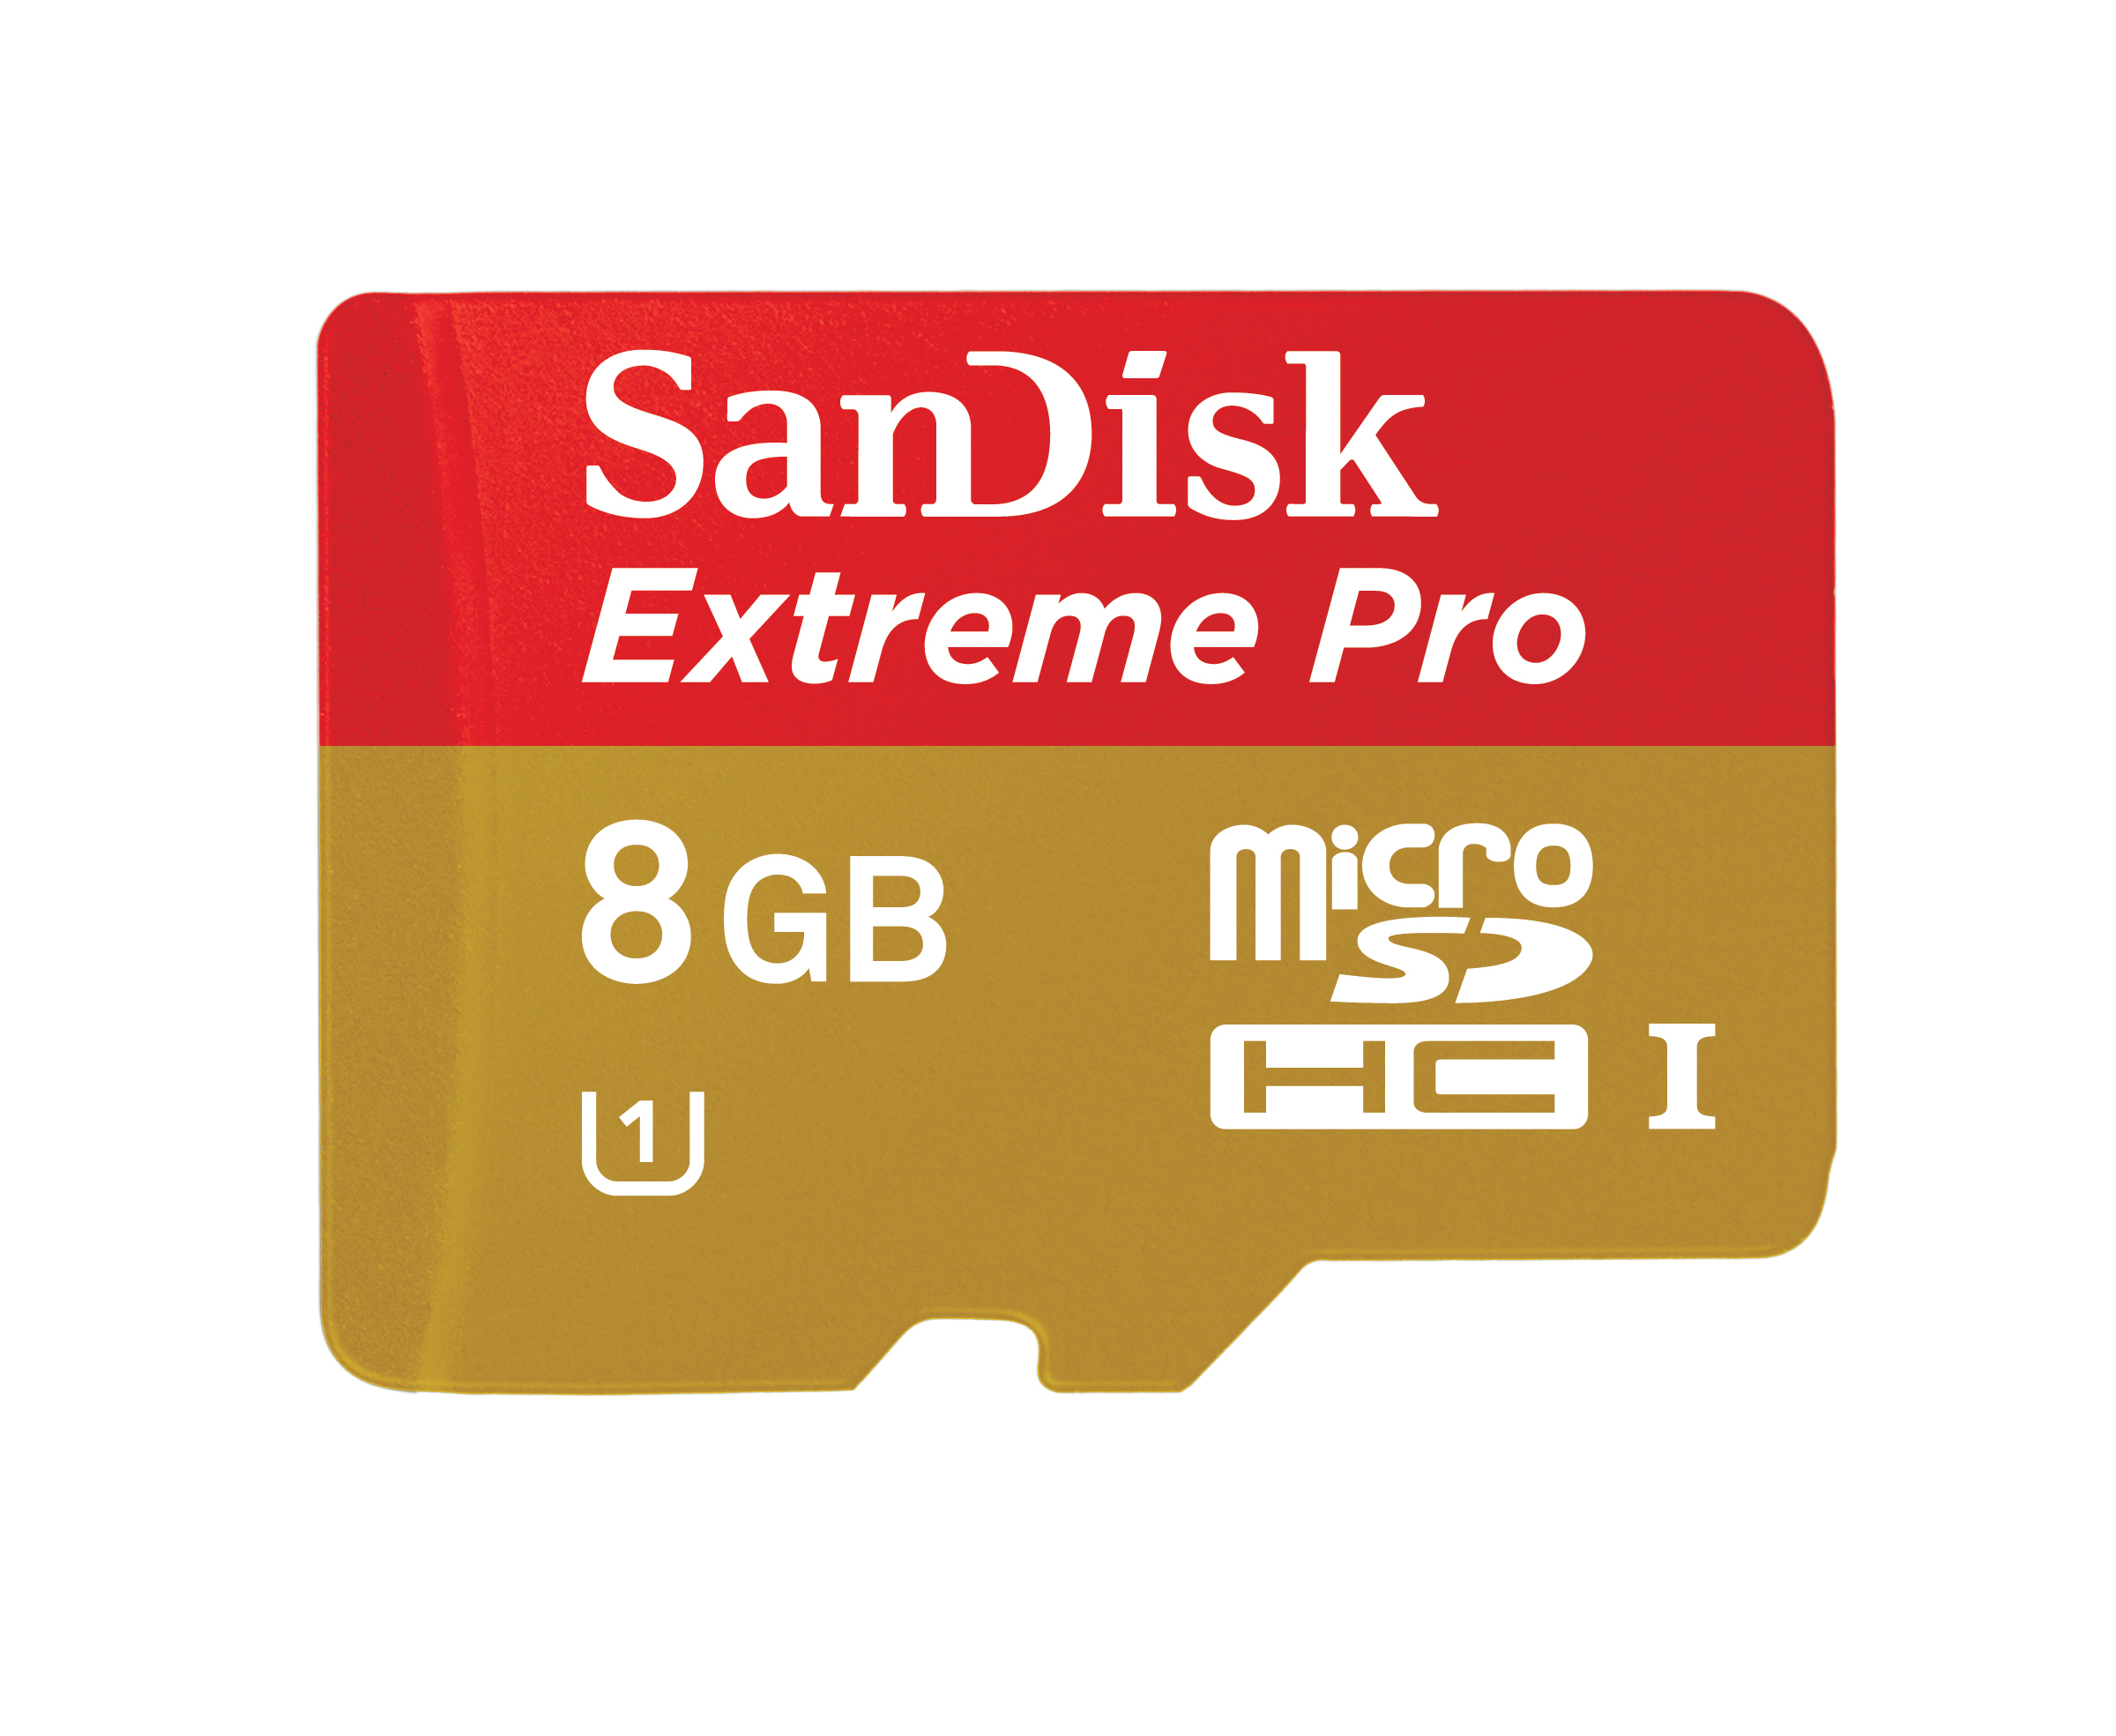 Extreme Pro Micro SDHC UHS-I card - 8GB